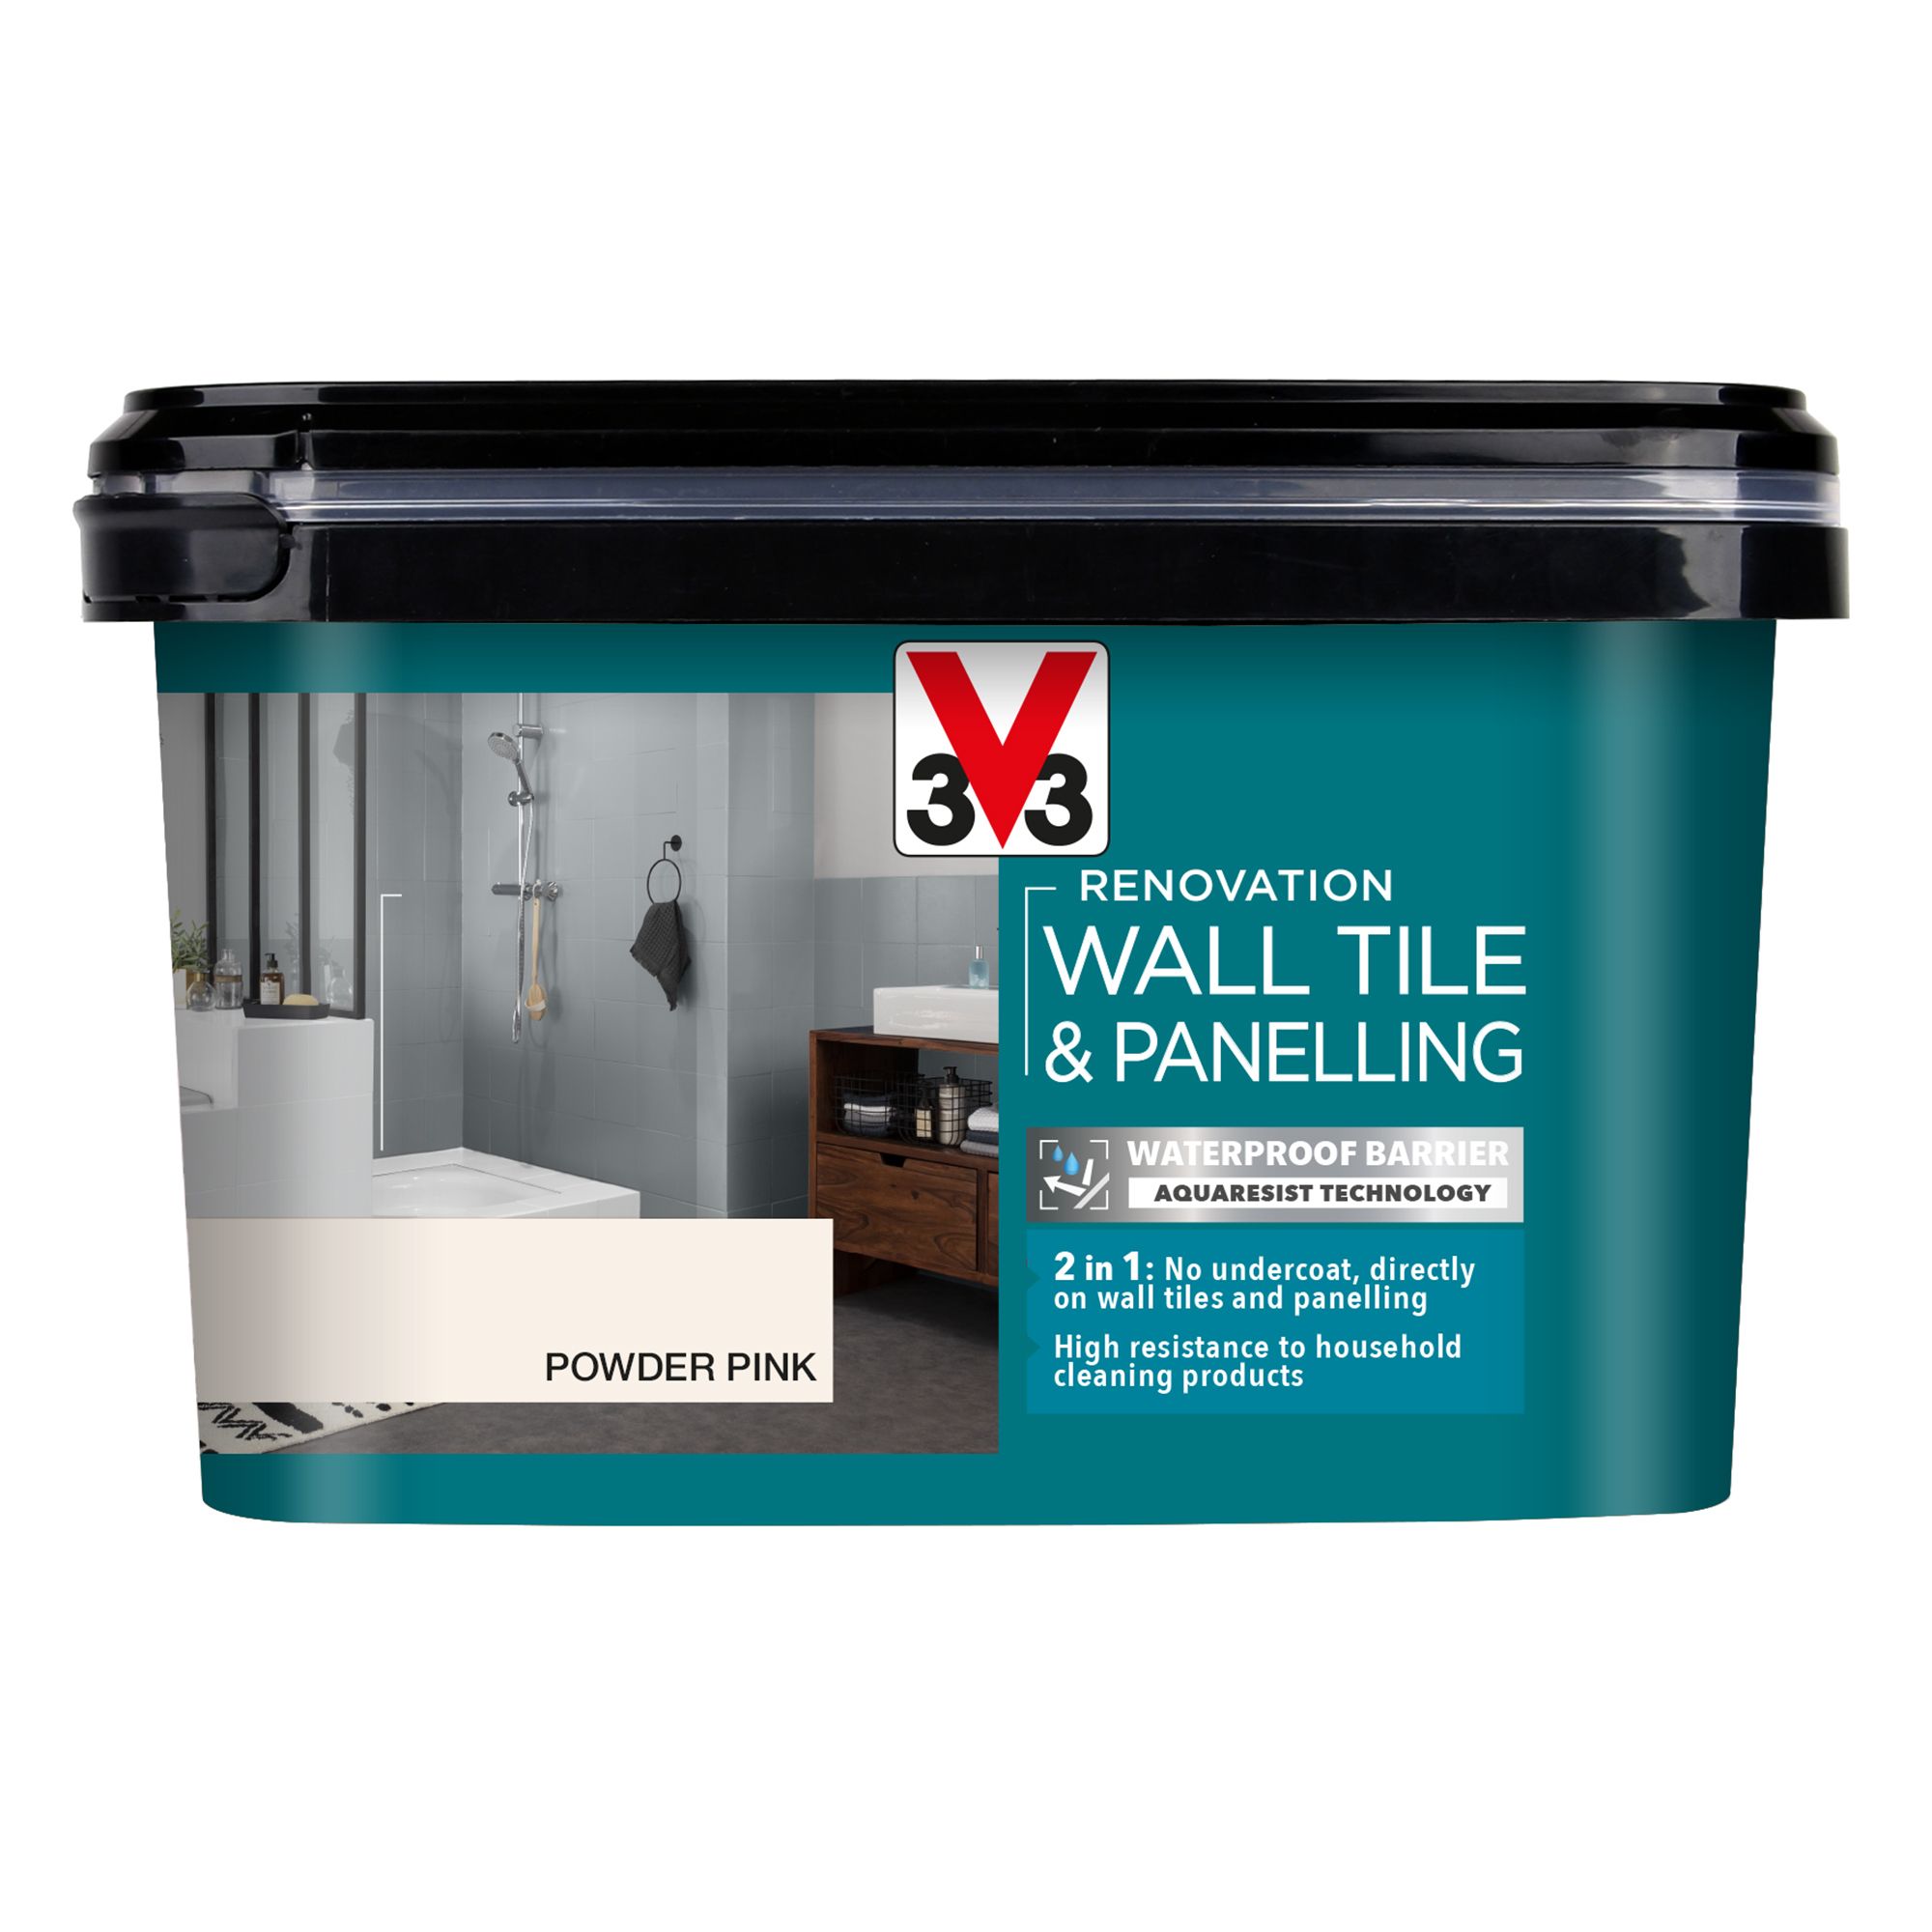 V33 Renovation Powder Pink Satinwood Wall tile & panelling paint, 2L